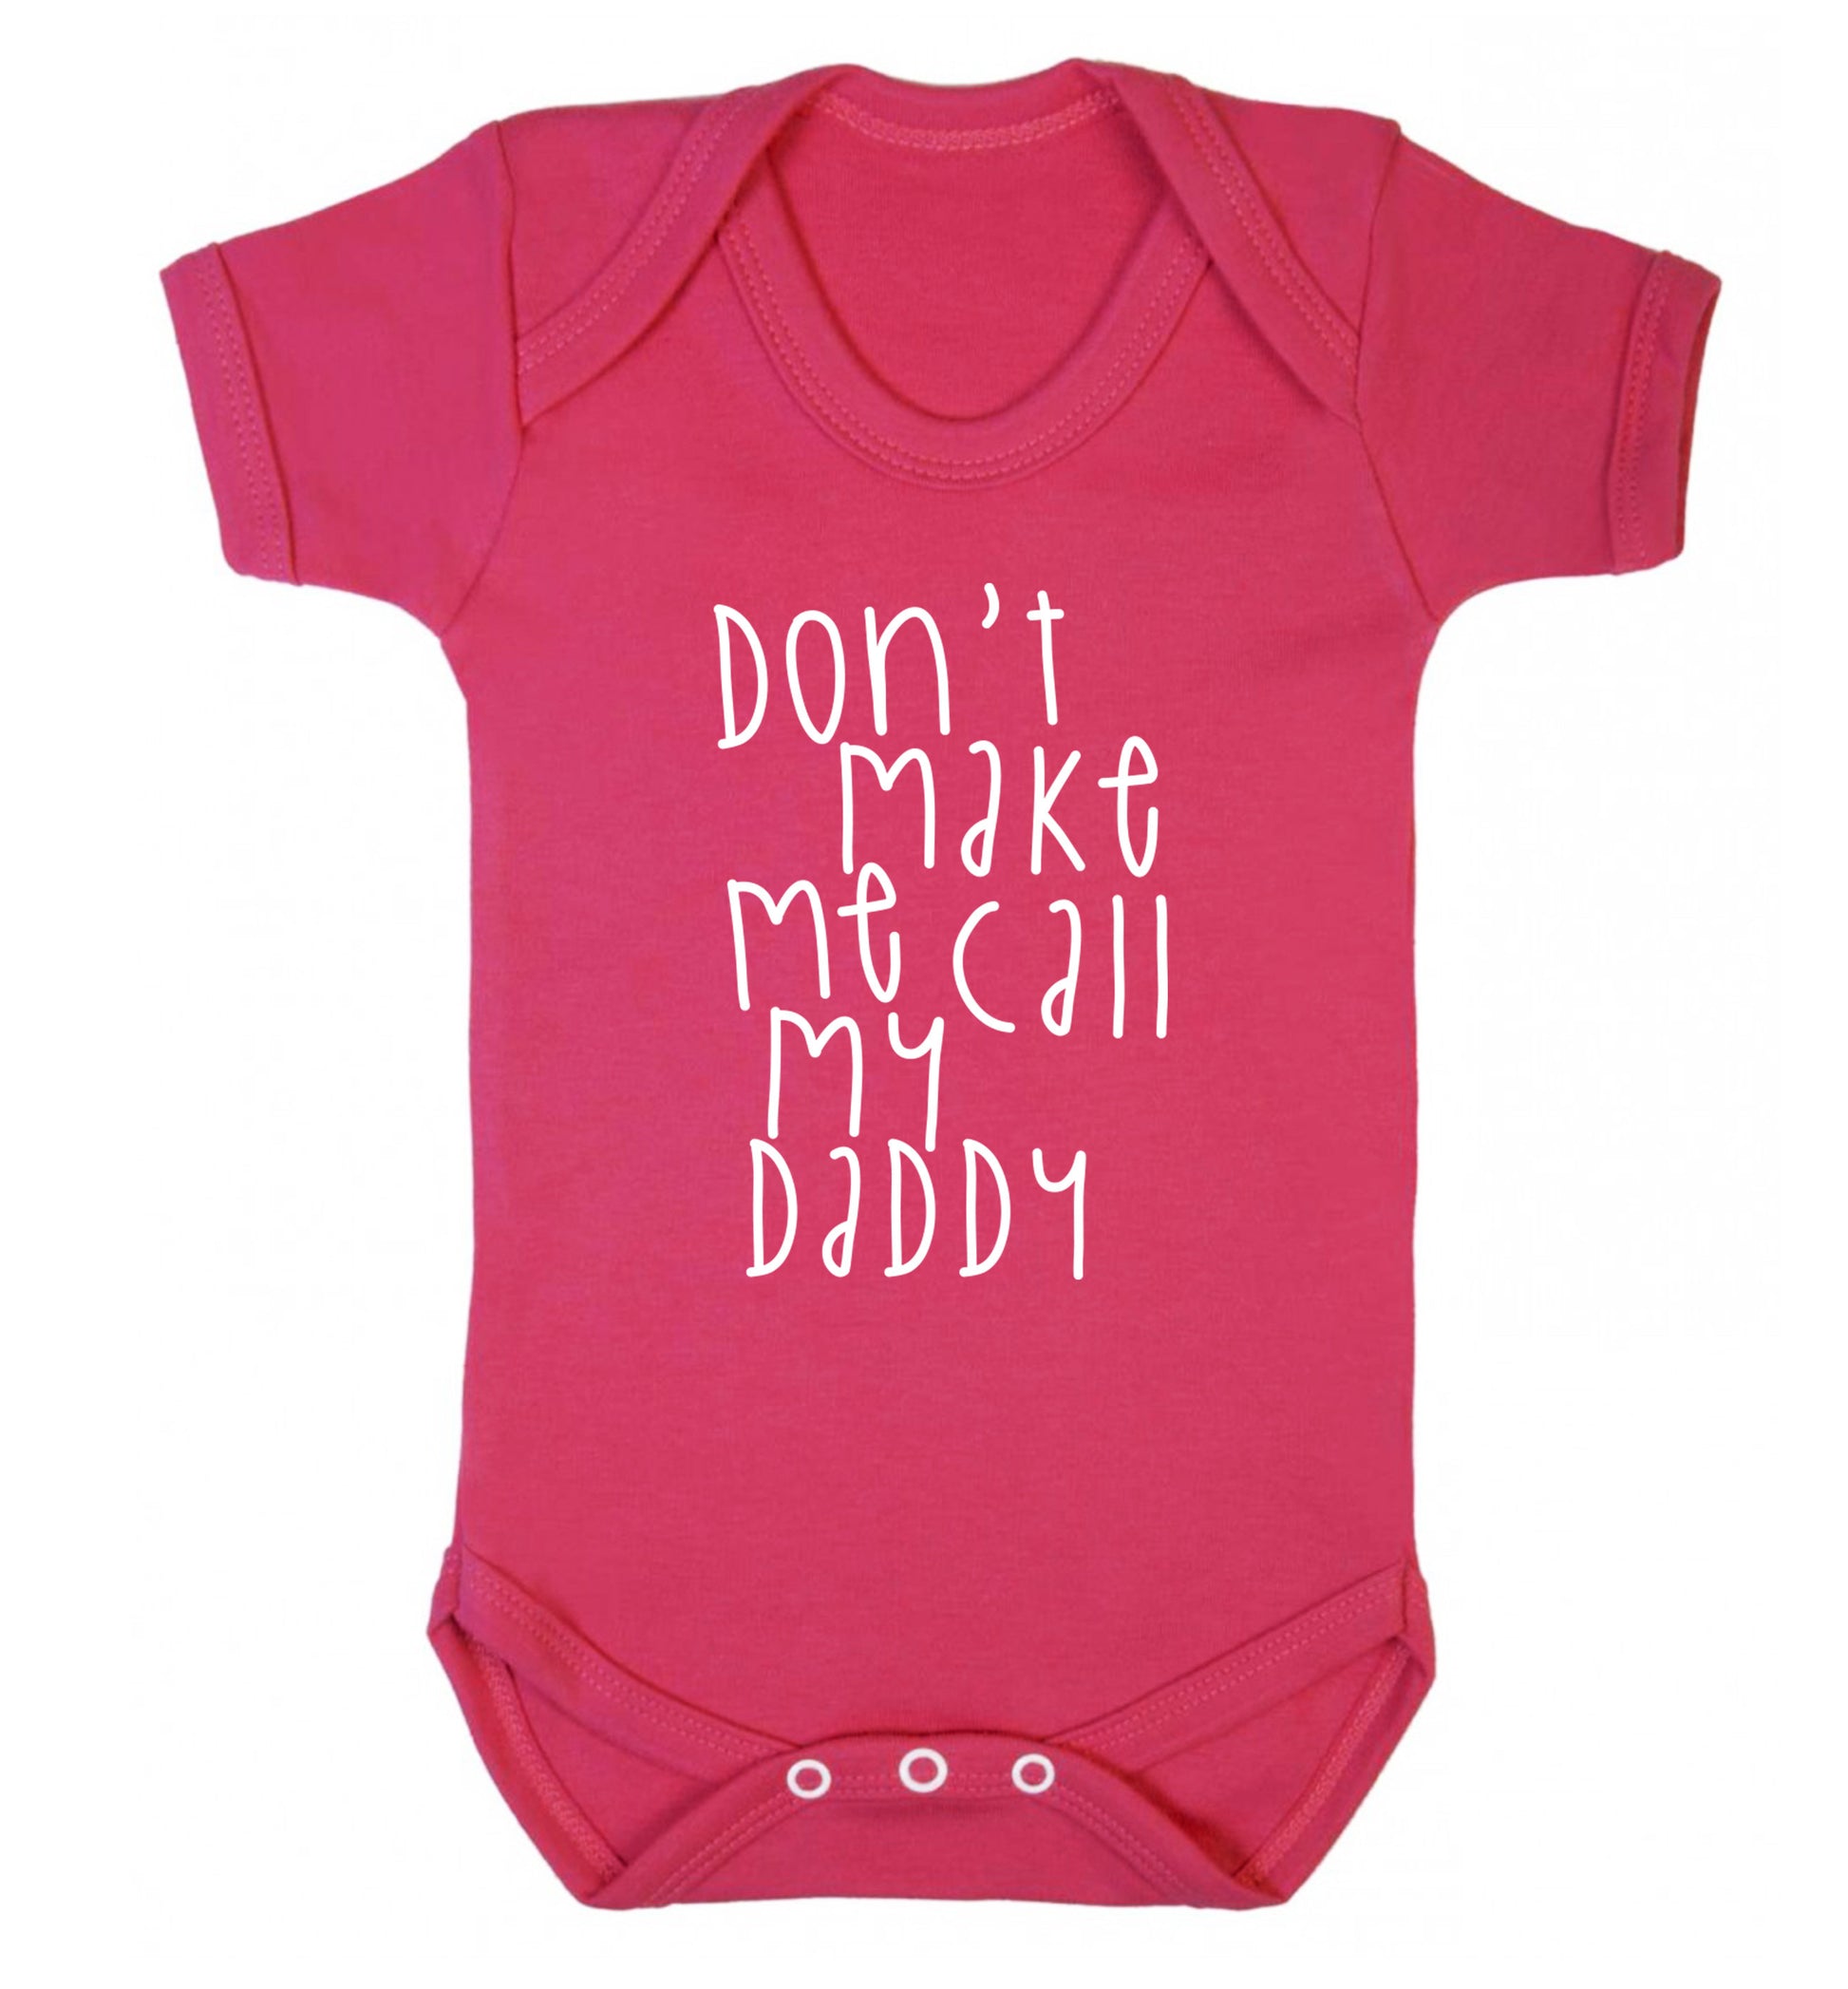 Don't make me call my daddy Baby Vest dark pink 18-24 months